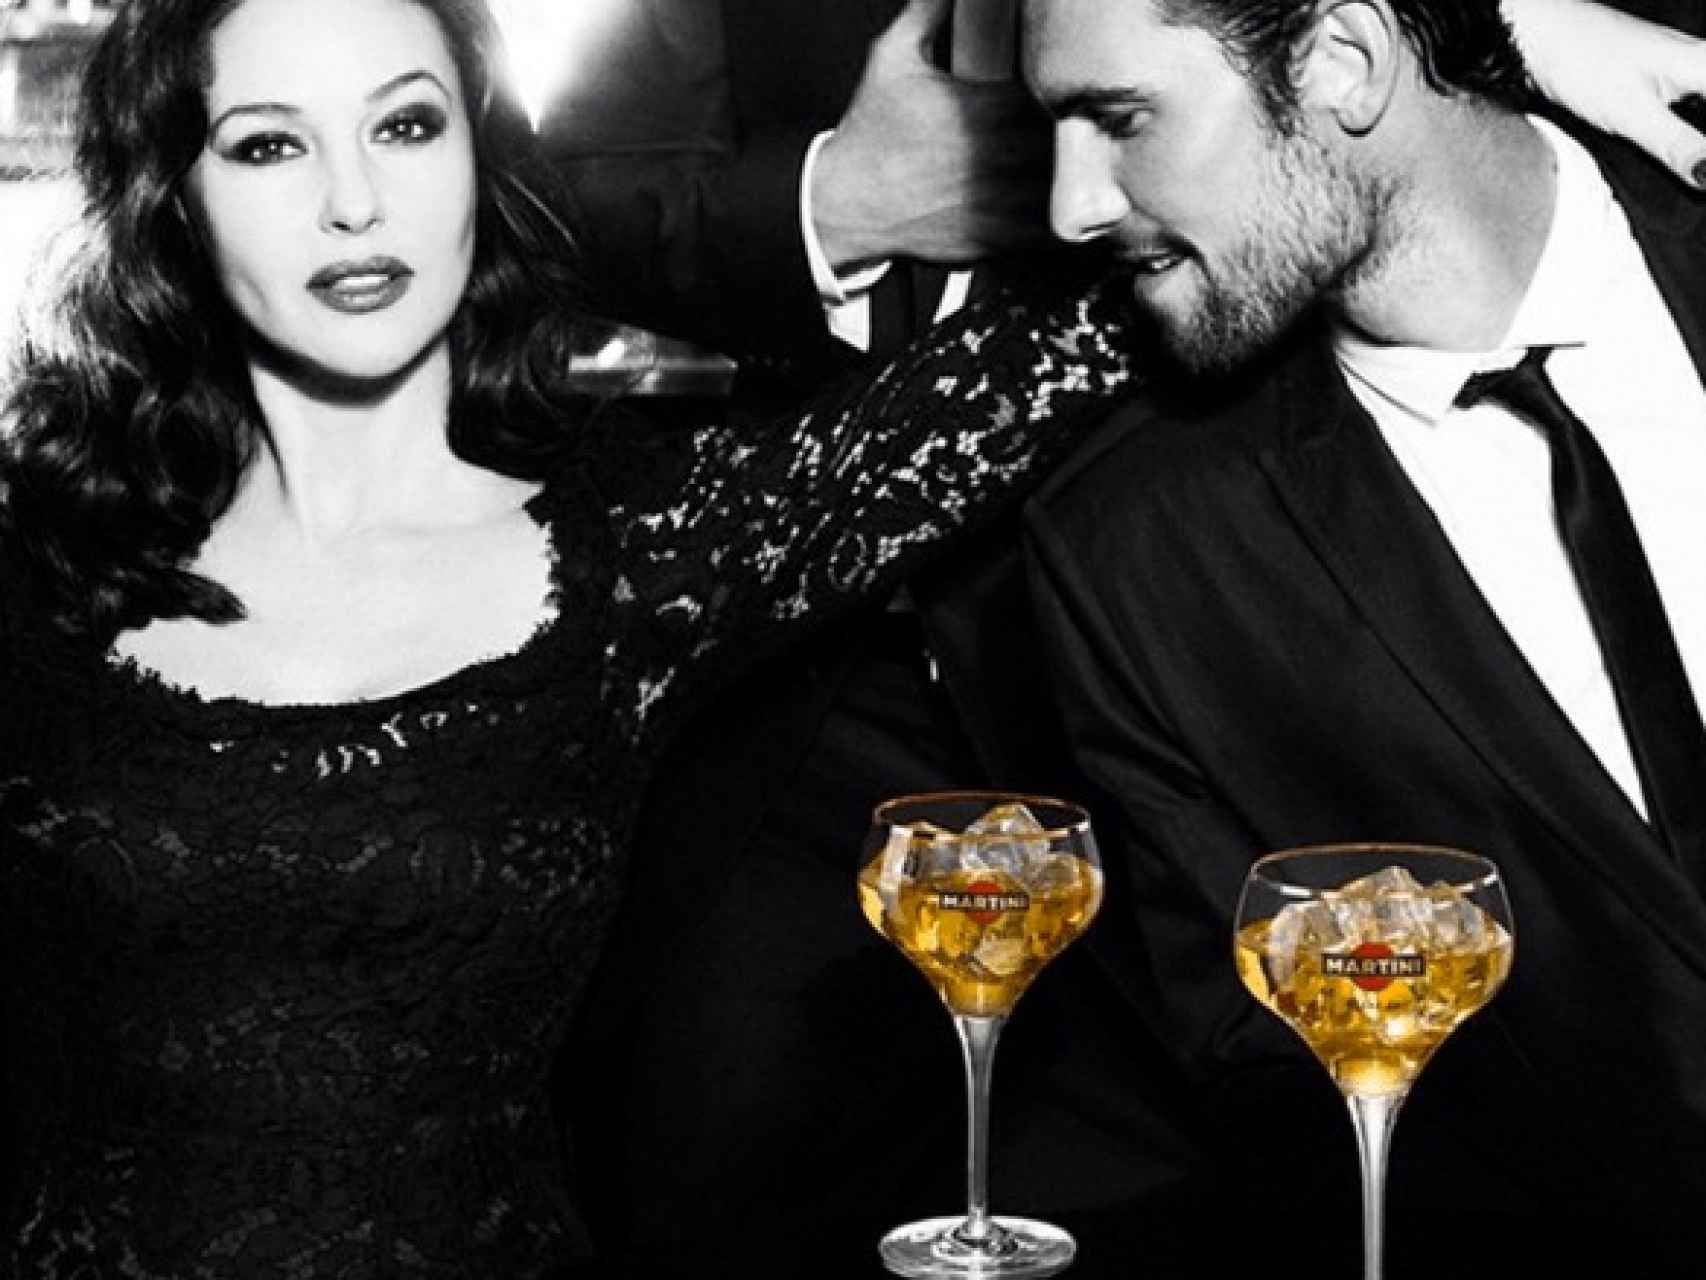 El modelo junto a Mónica Bellucci como imagen publicitaria de Martini.